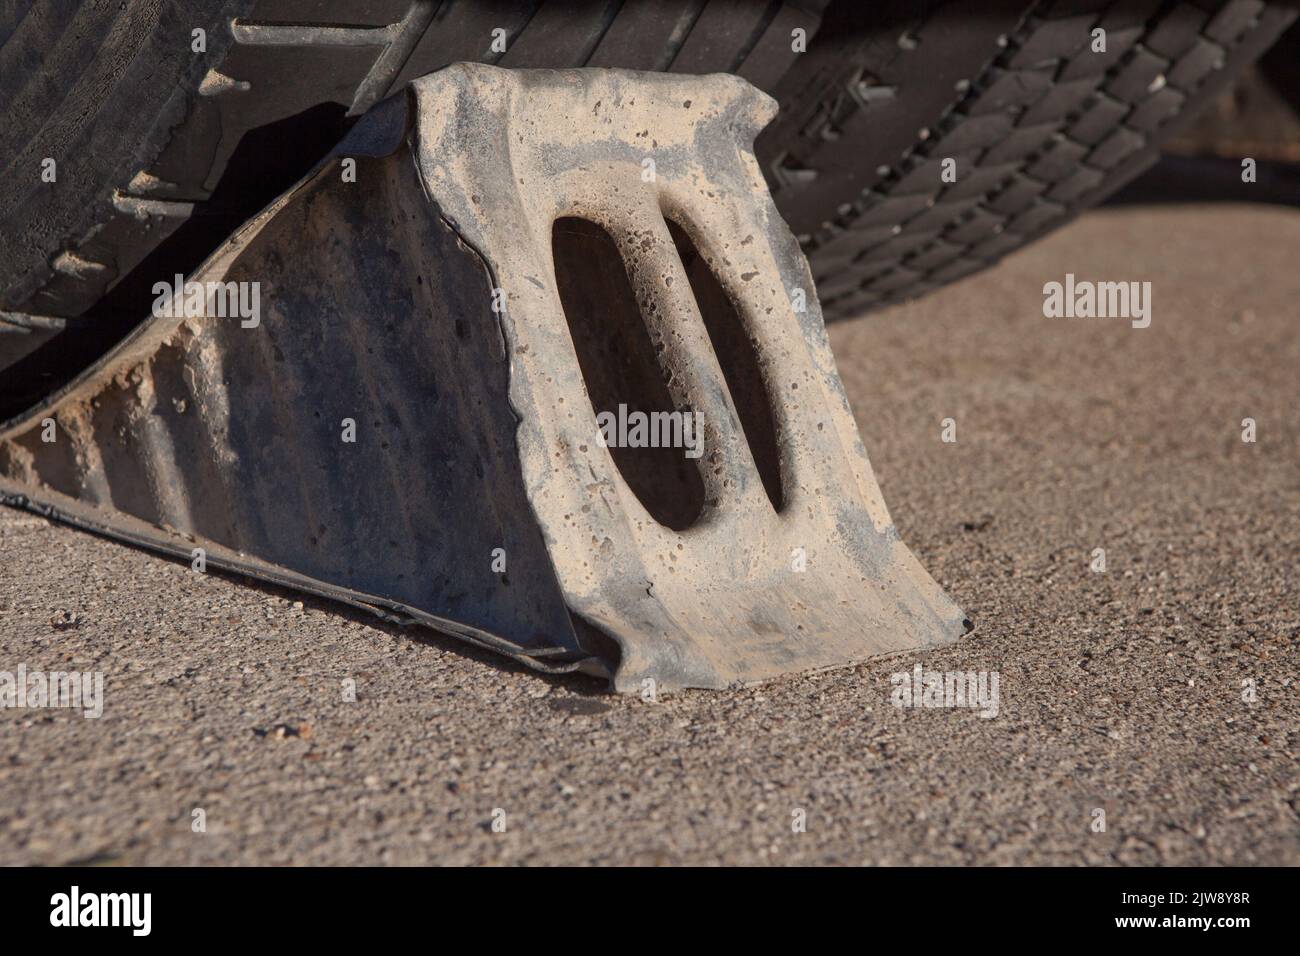 Full metal wheel chock under trailer. Ground view Stock Photo